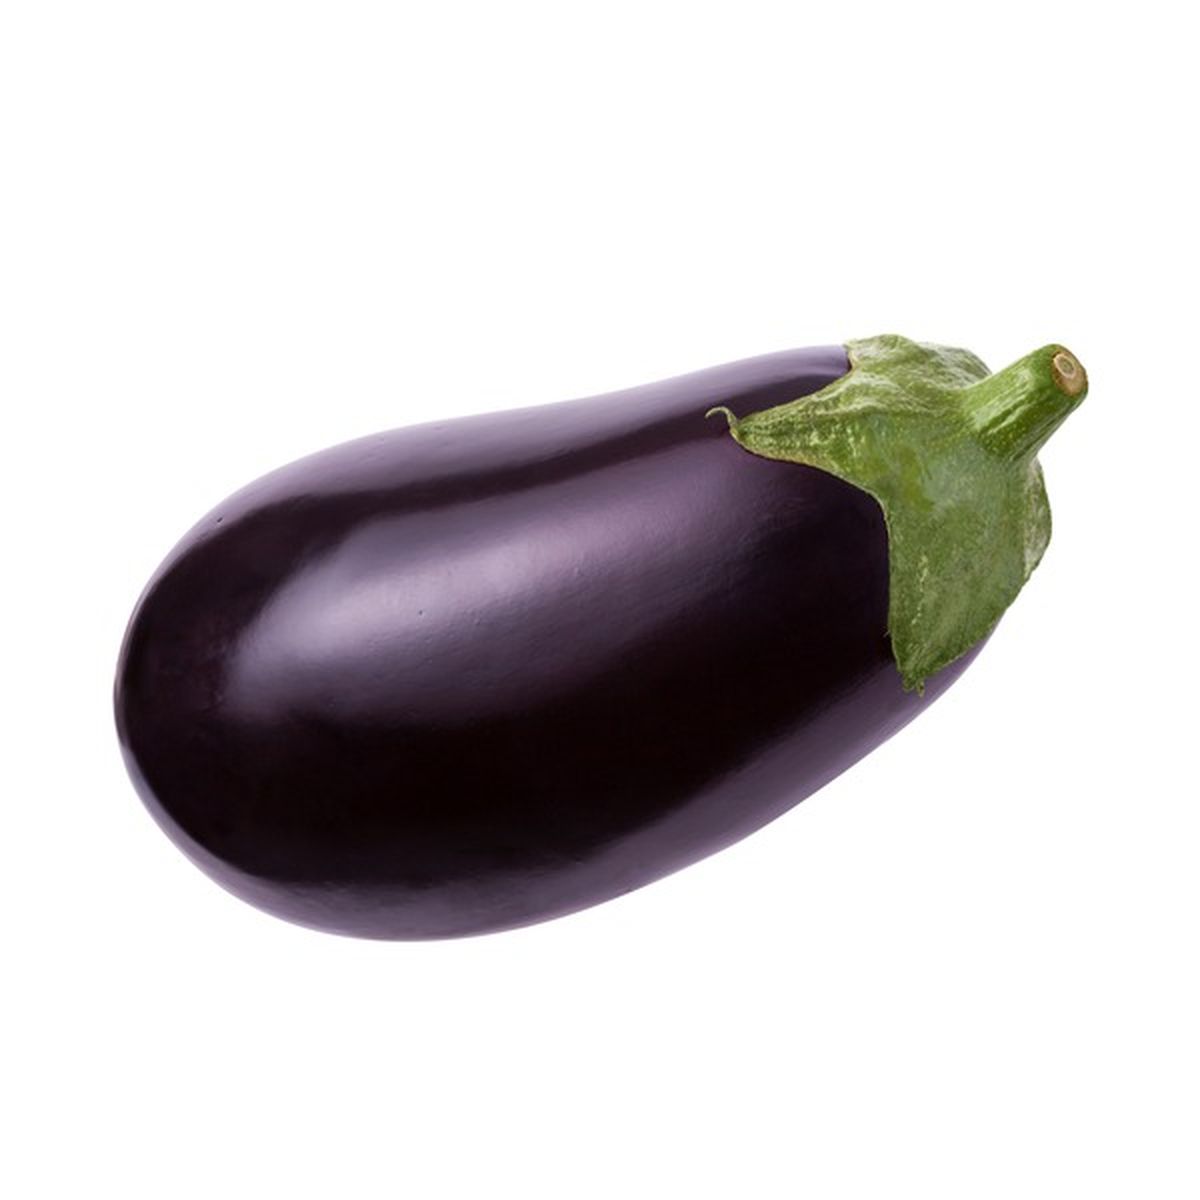 eggplants, preferred the fat ones